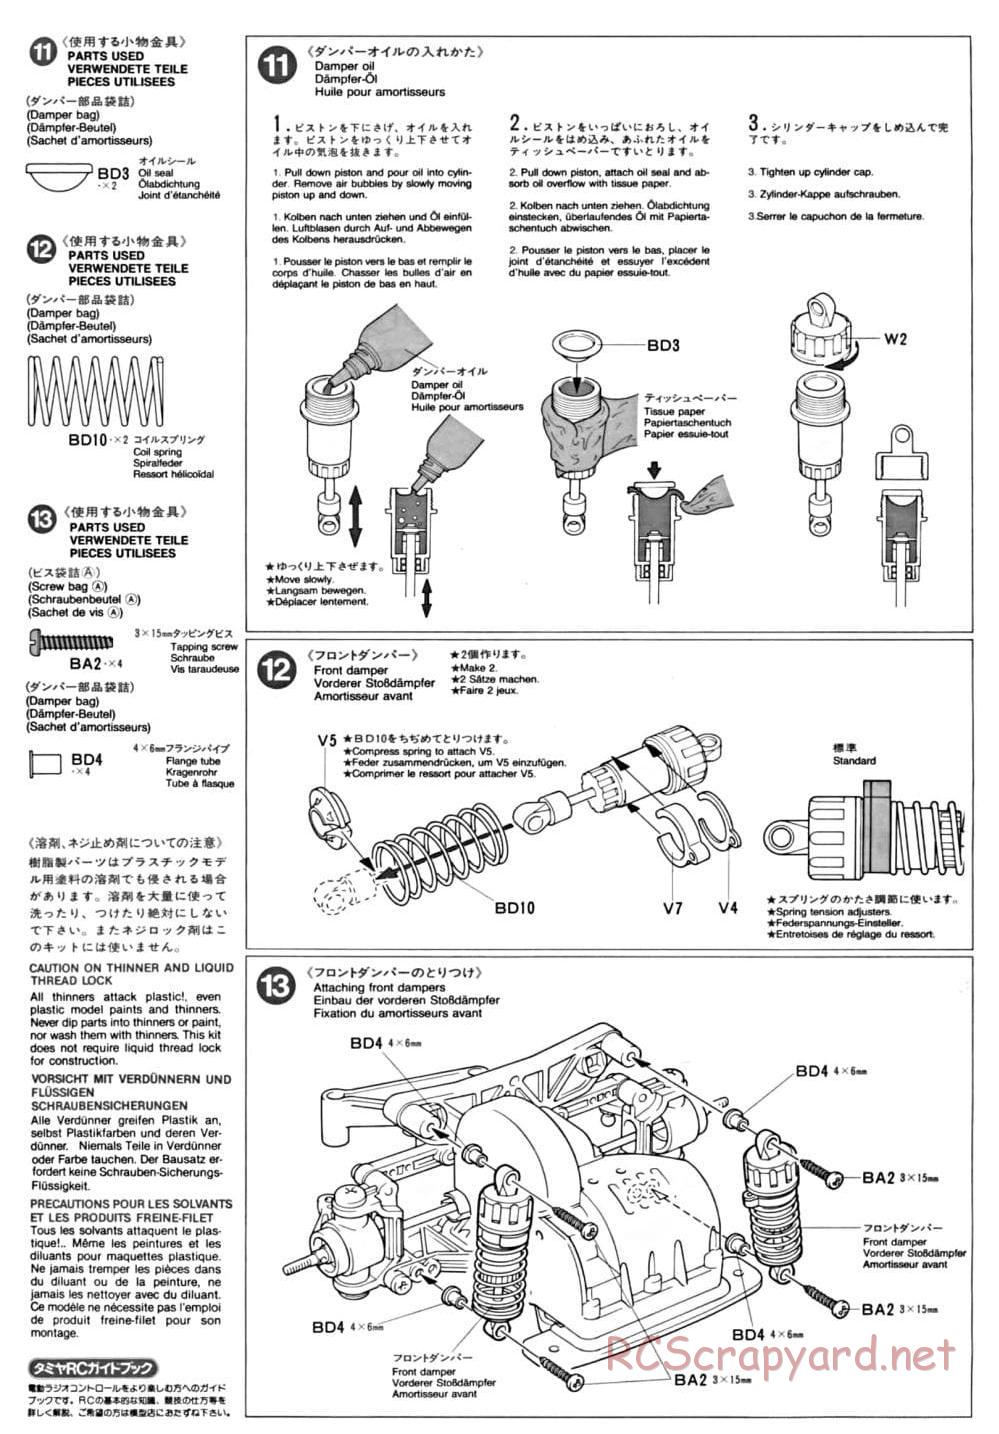 Tamiya - FF-01 Chassis - Manual - Page 8